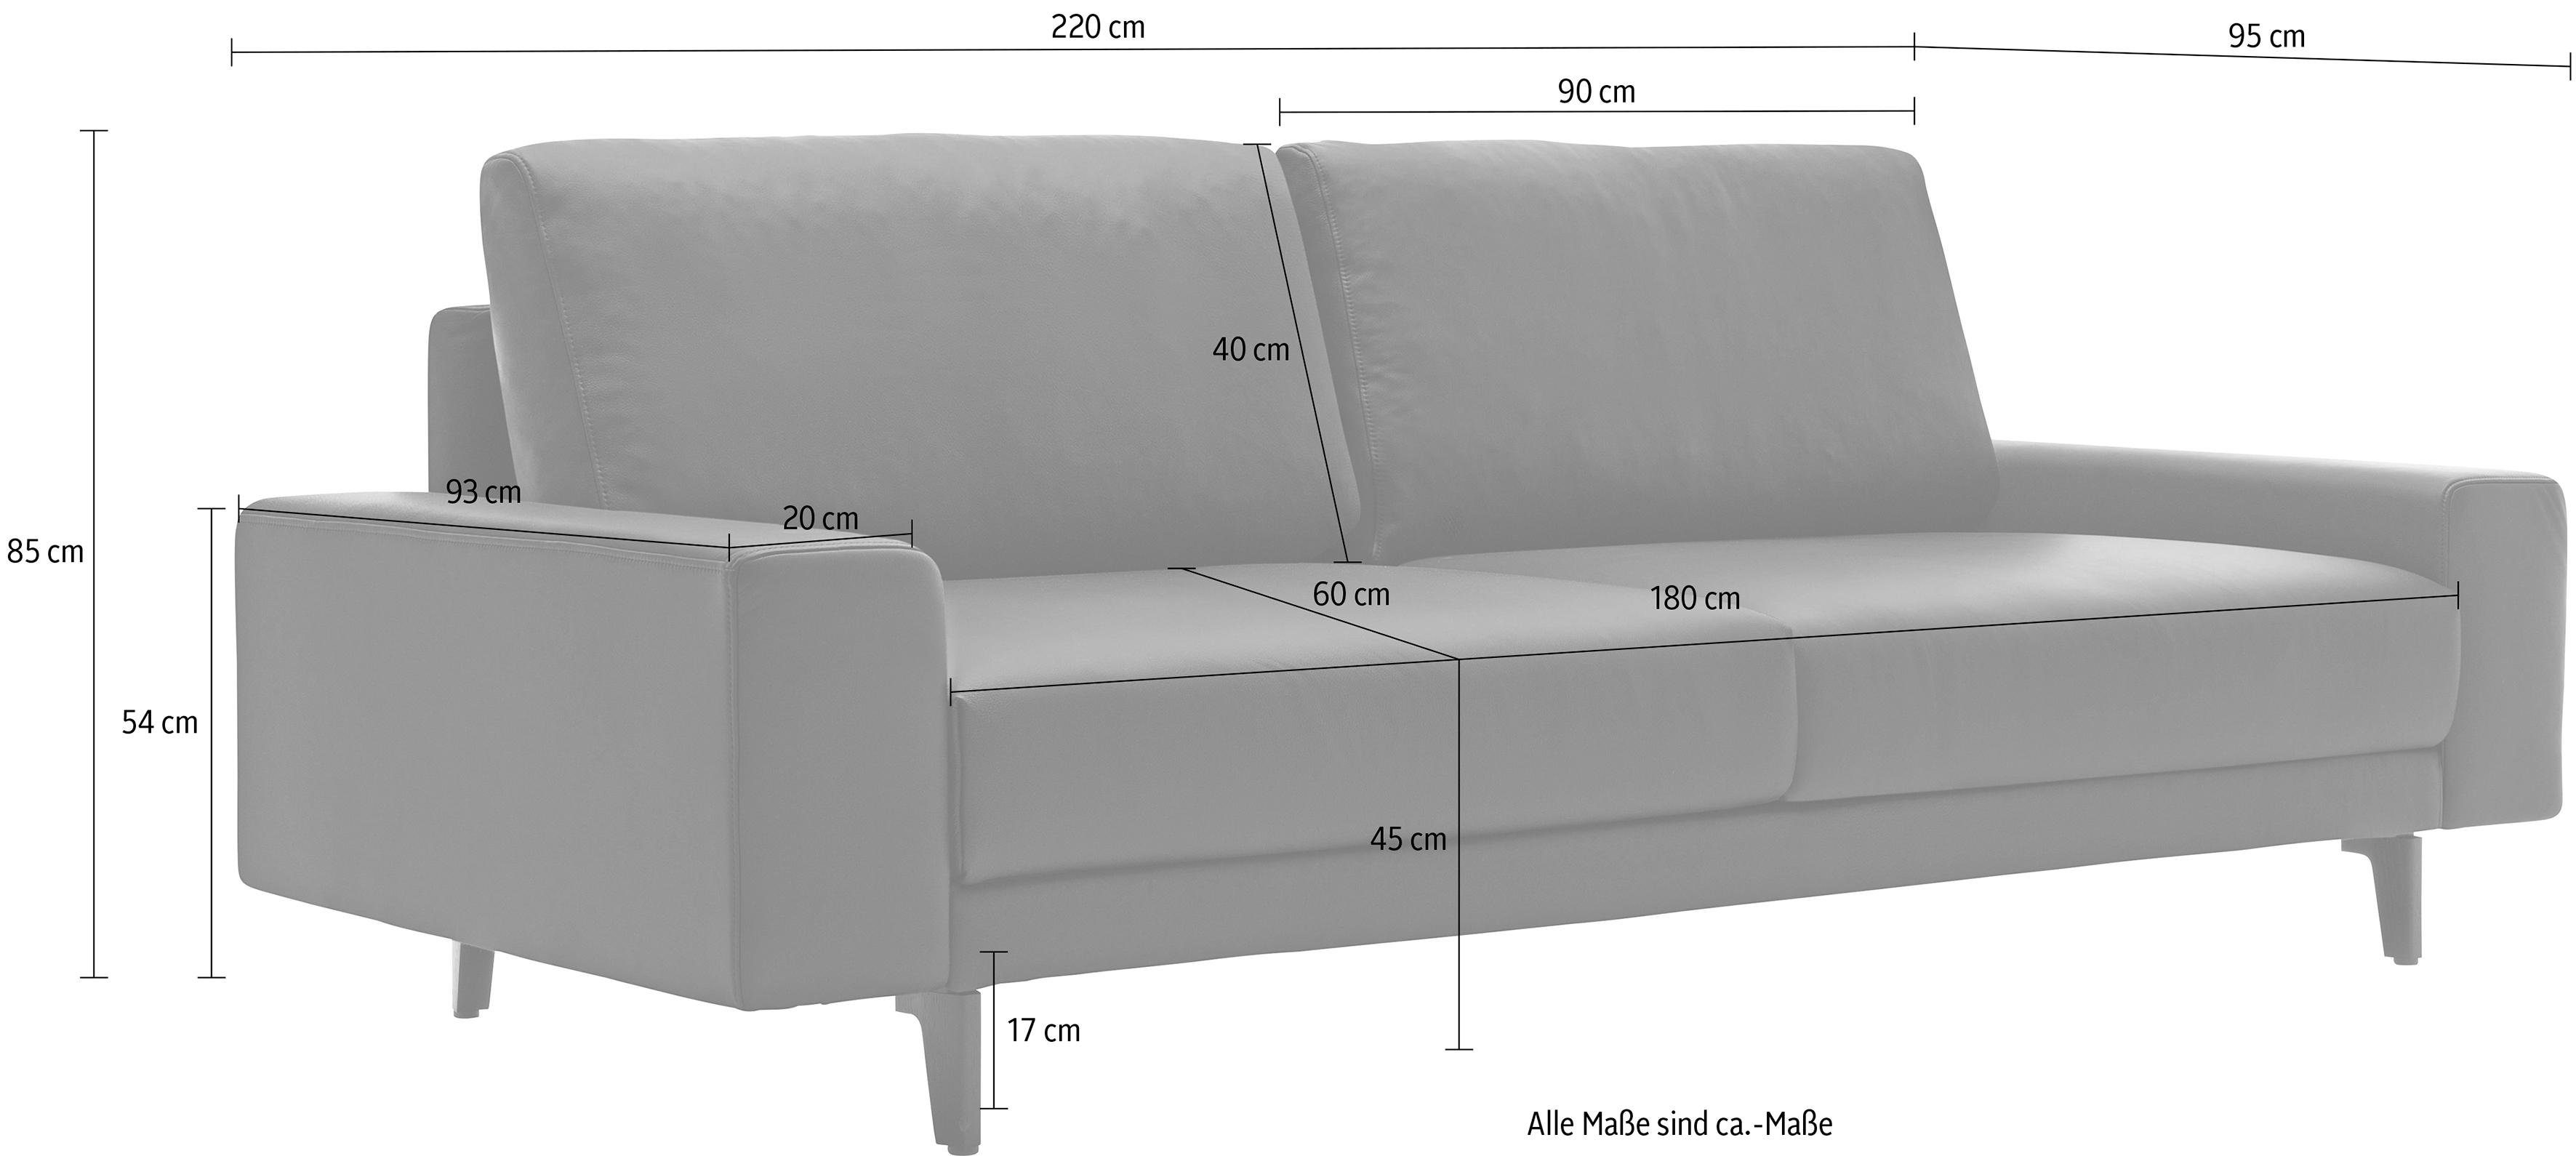 hülsta sofa 3-Sitzer hs.450, Armlehne in umbragrau, breit 220 Breite niedrig, Alugussfüße cm